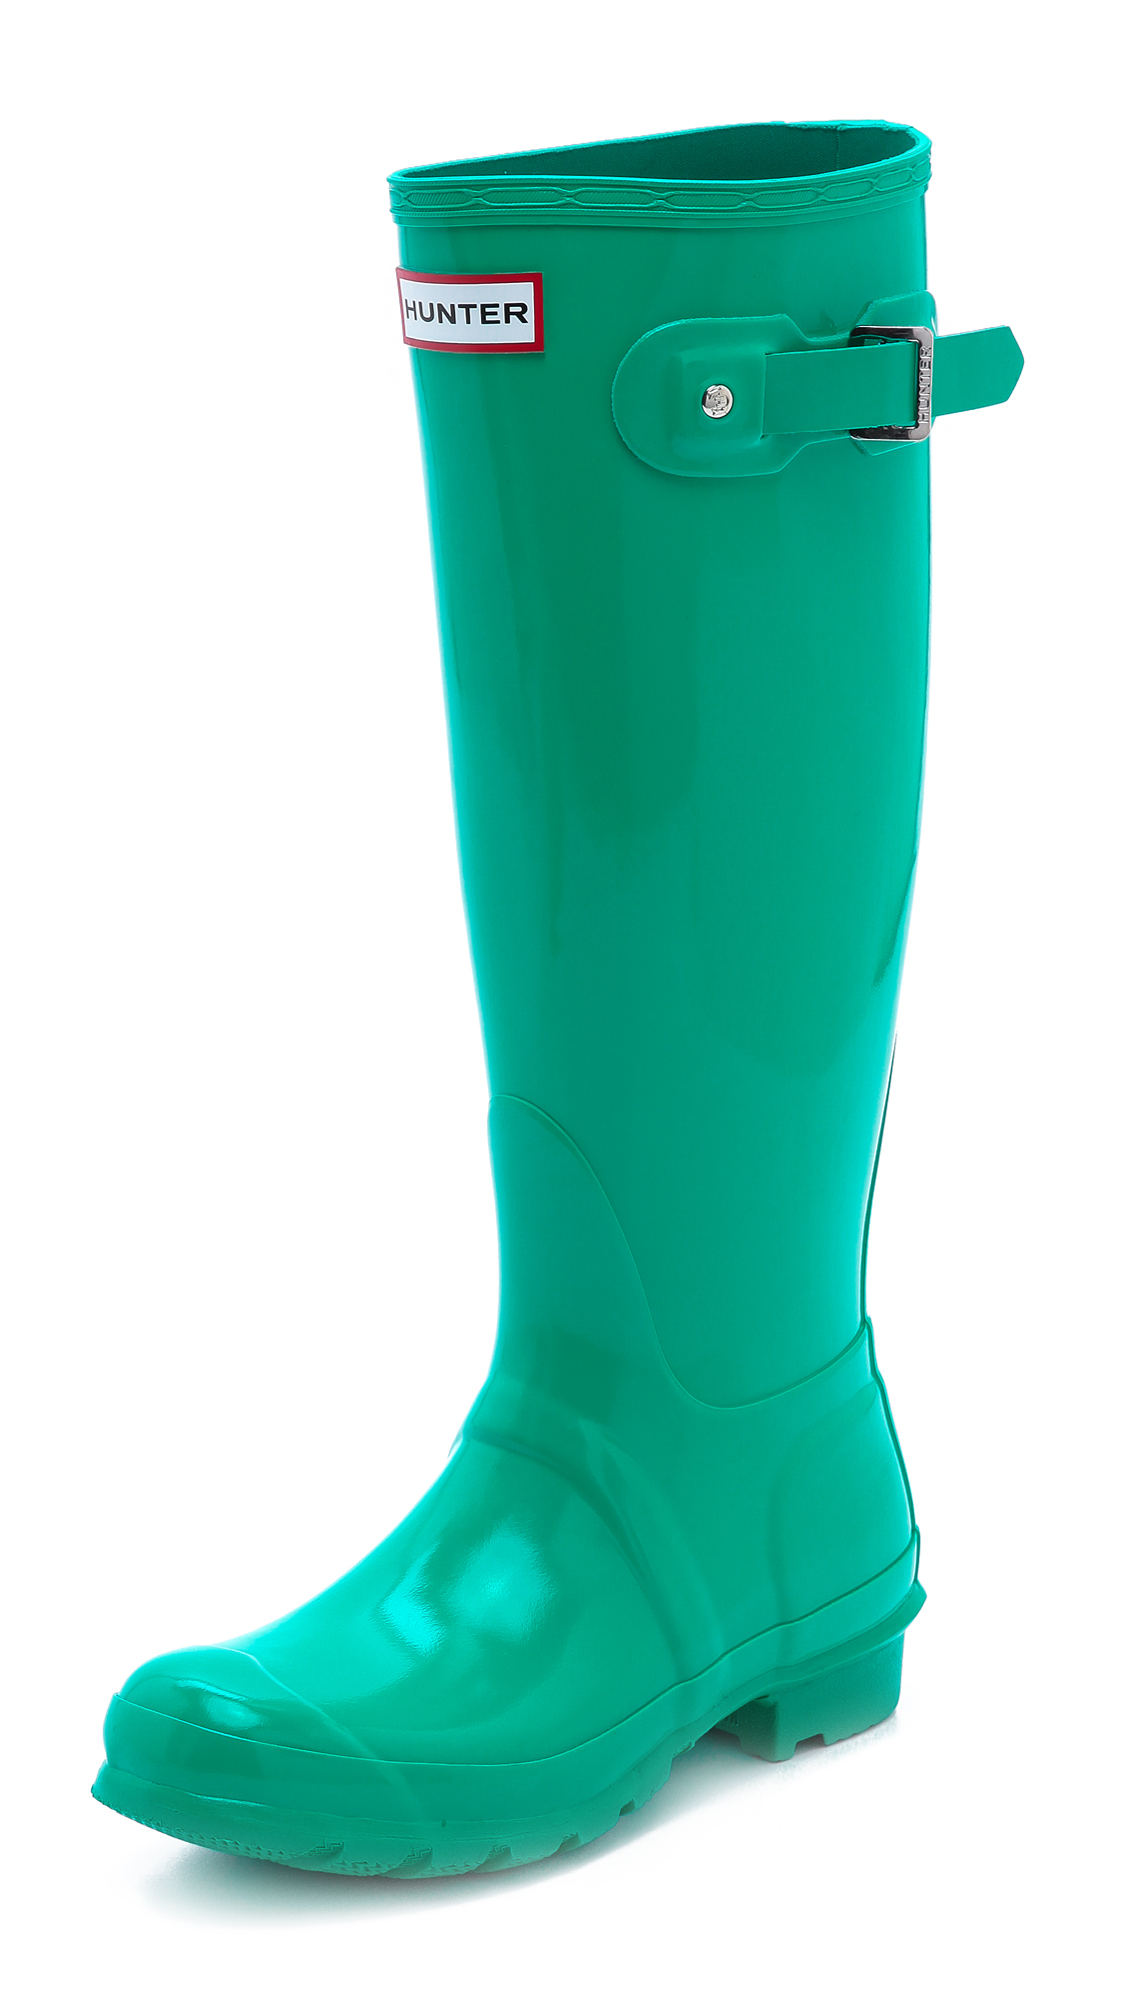 Lyst - Hunter Original Tall Gloss Boots in Green